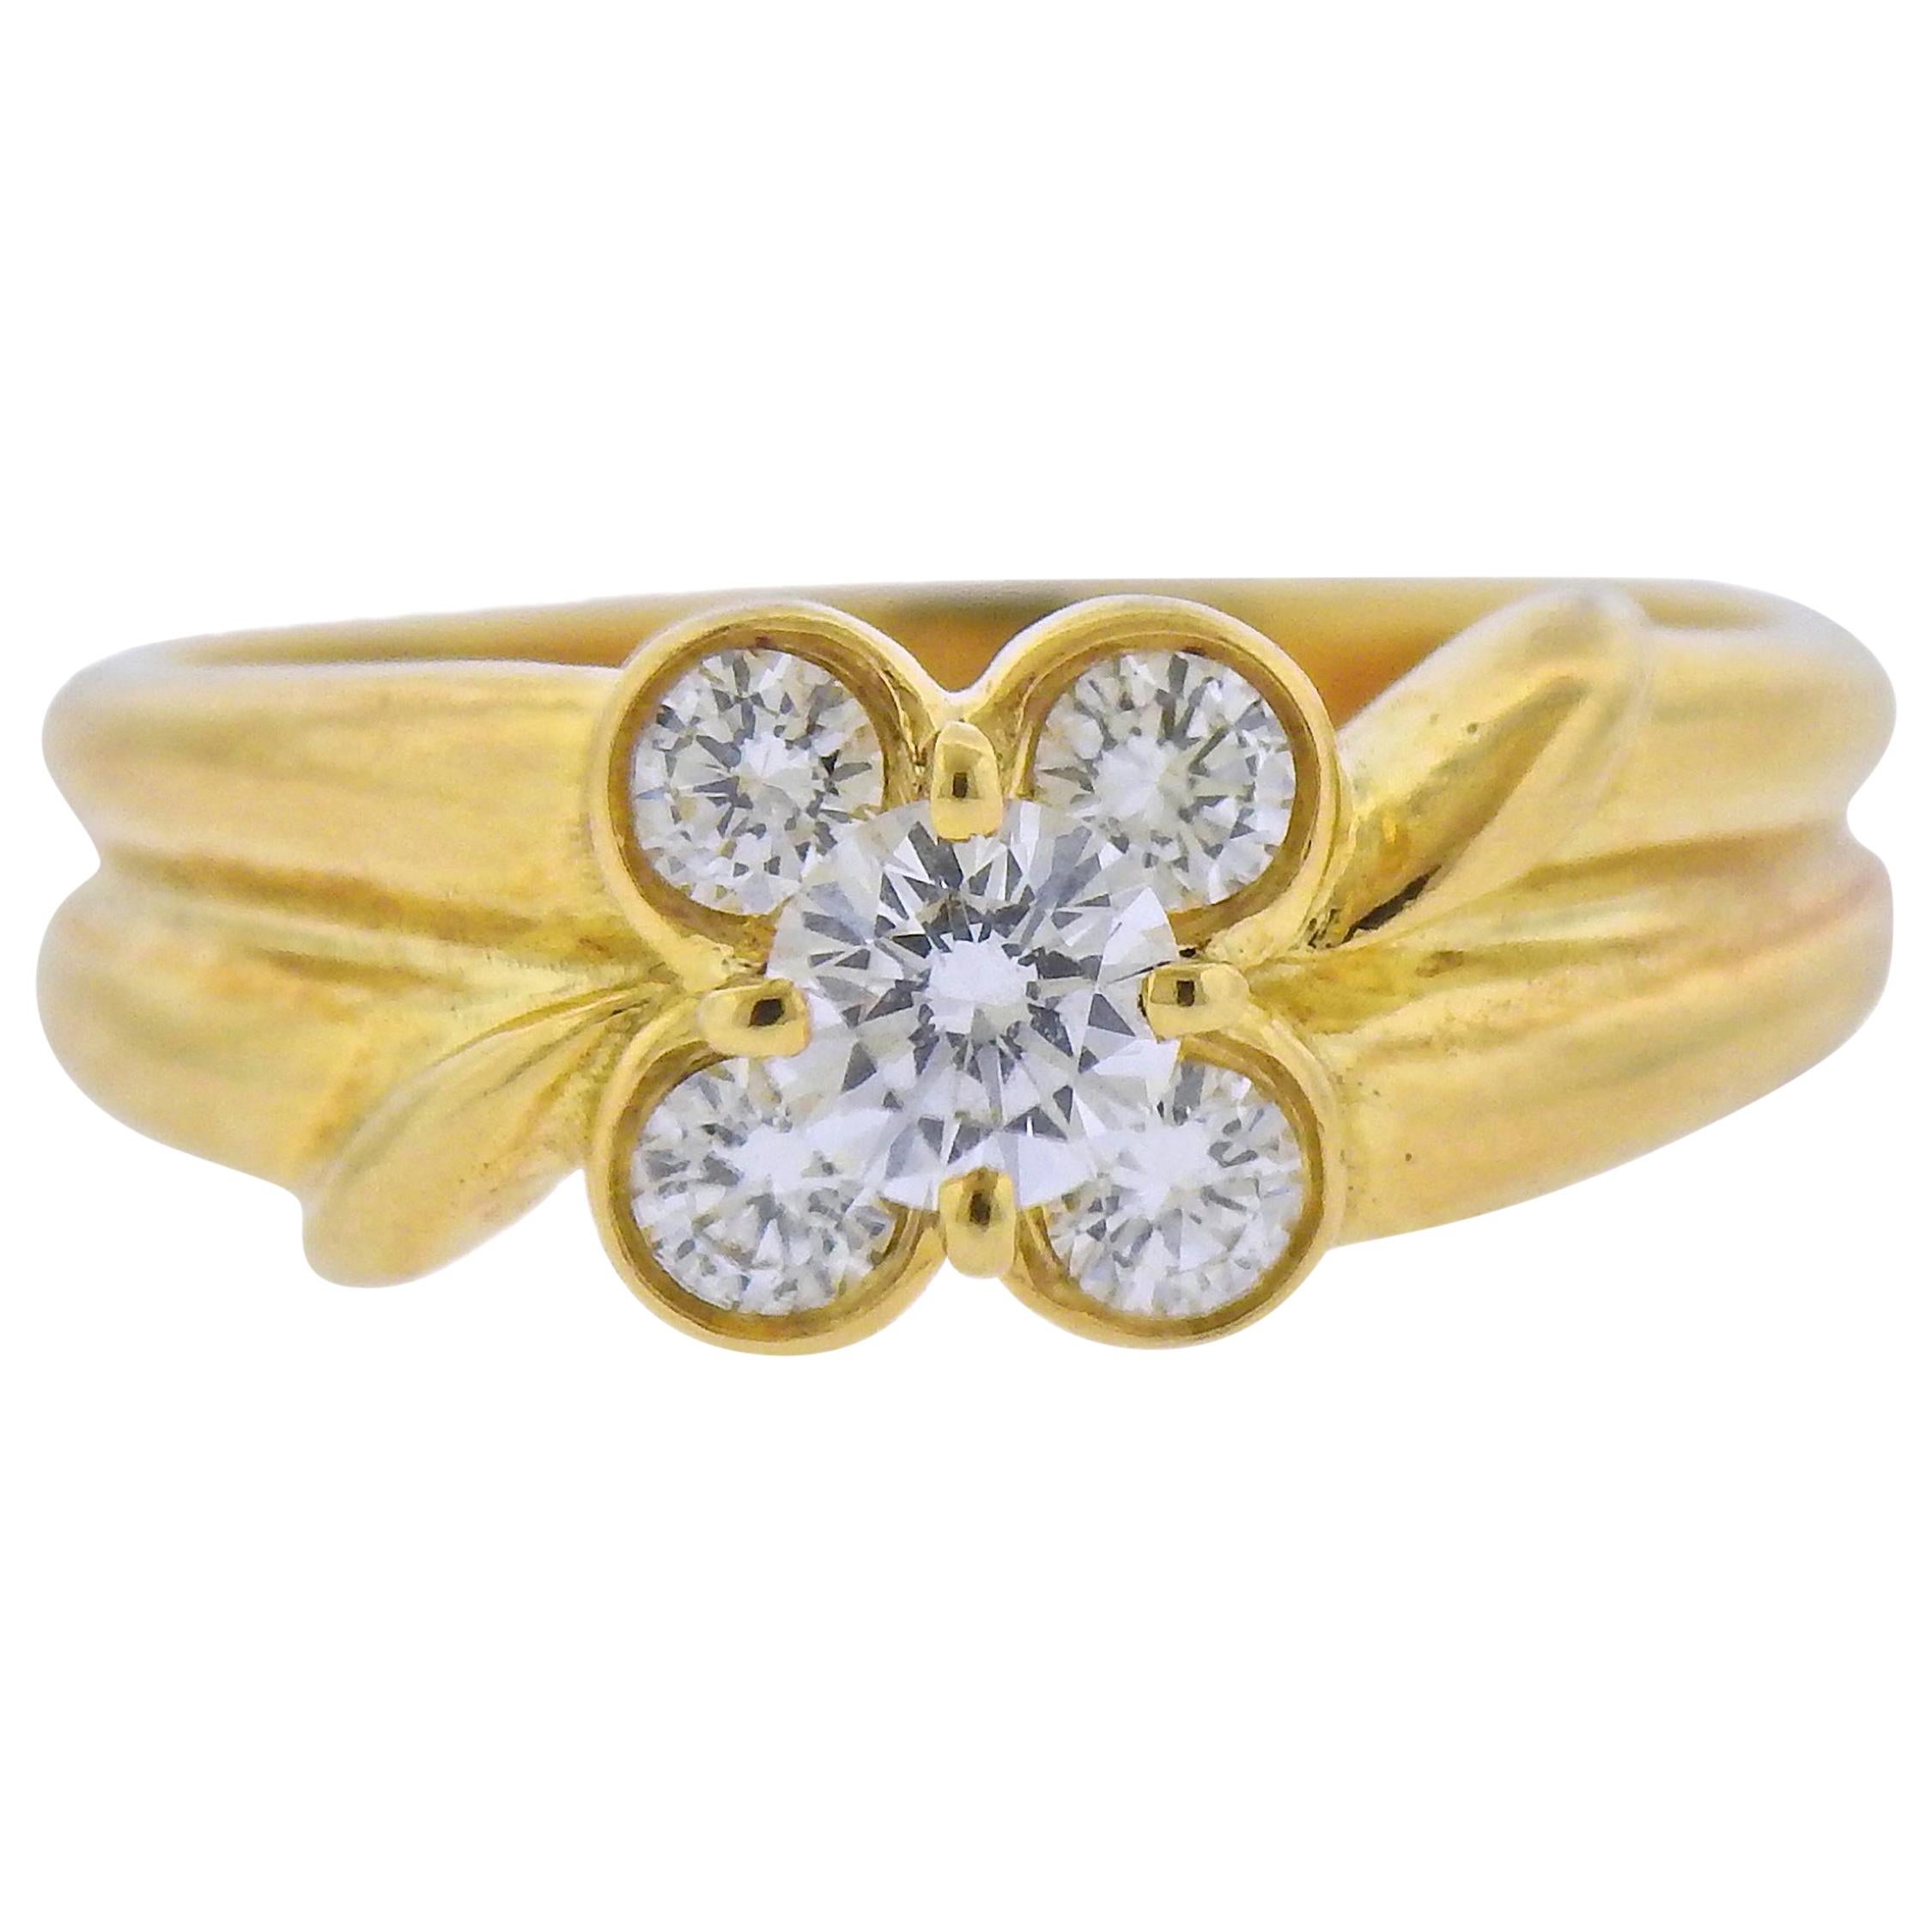 Van Cleef & Arpels, bague fleur en or et diamants